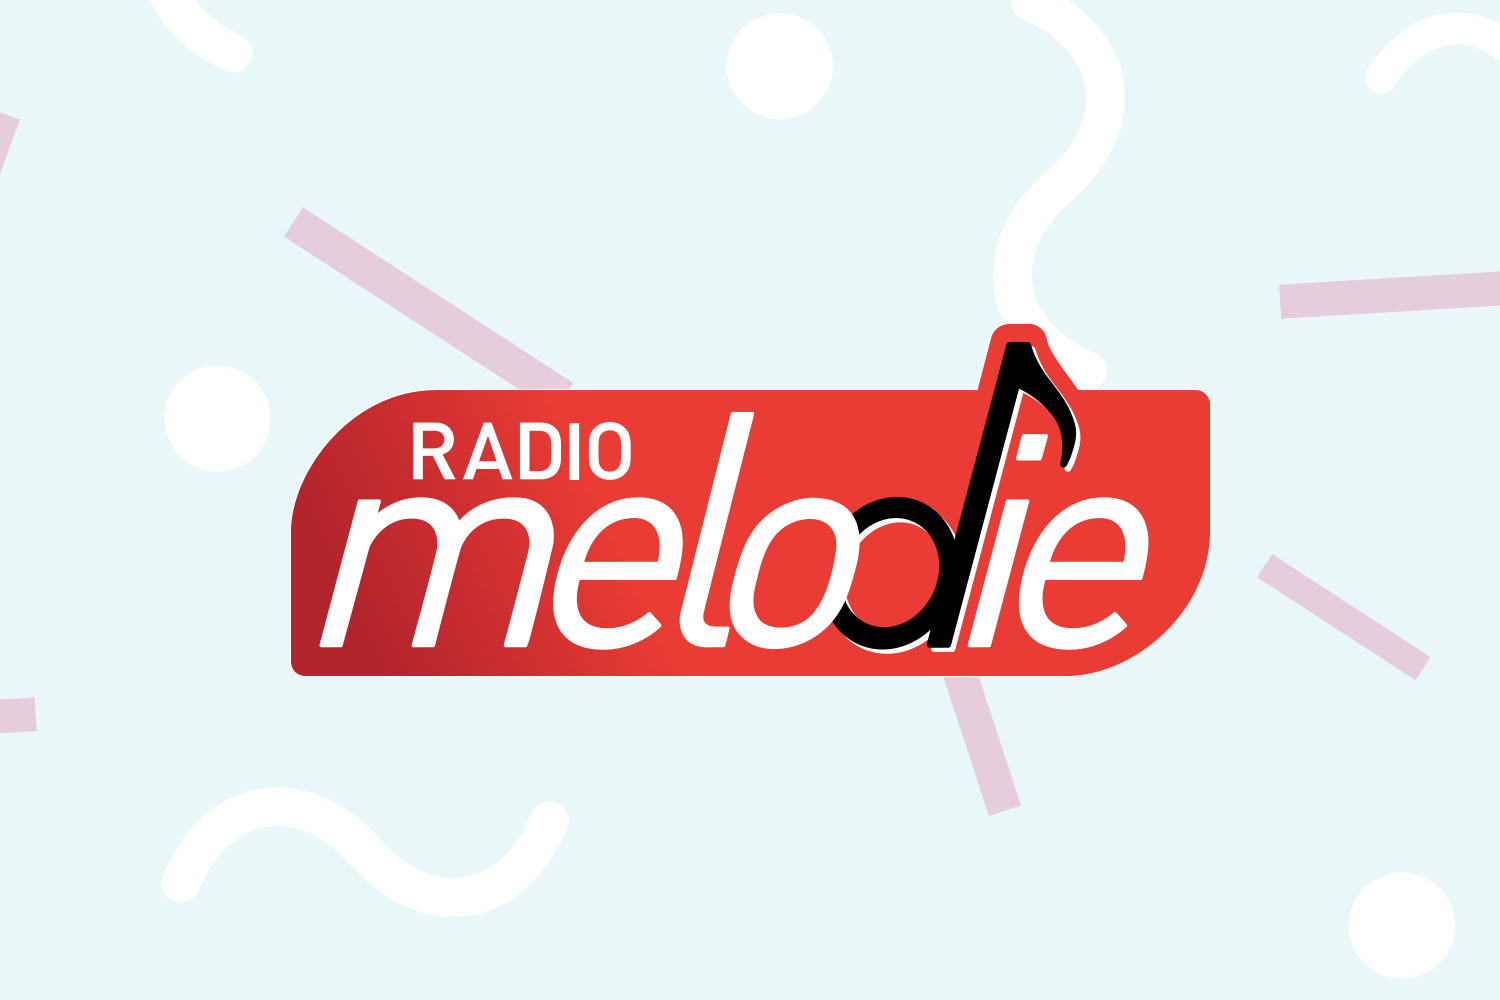 (c) Radiomelodie.com